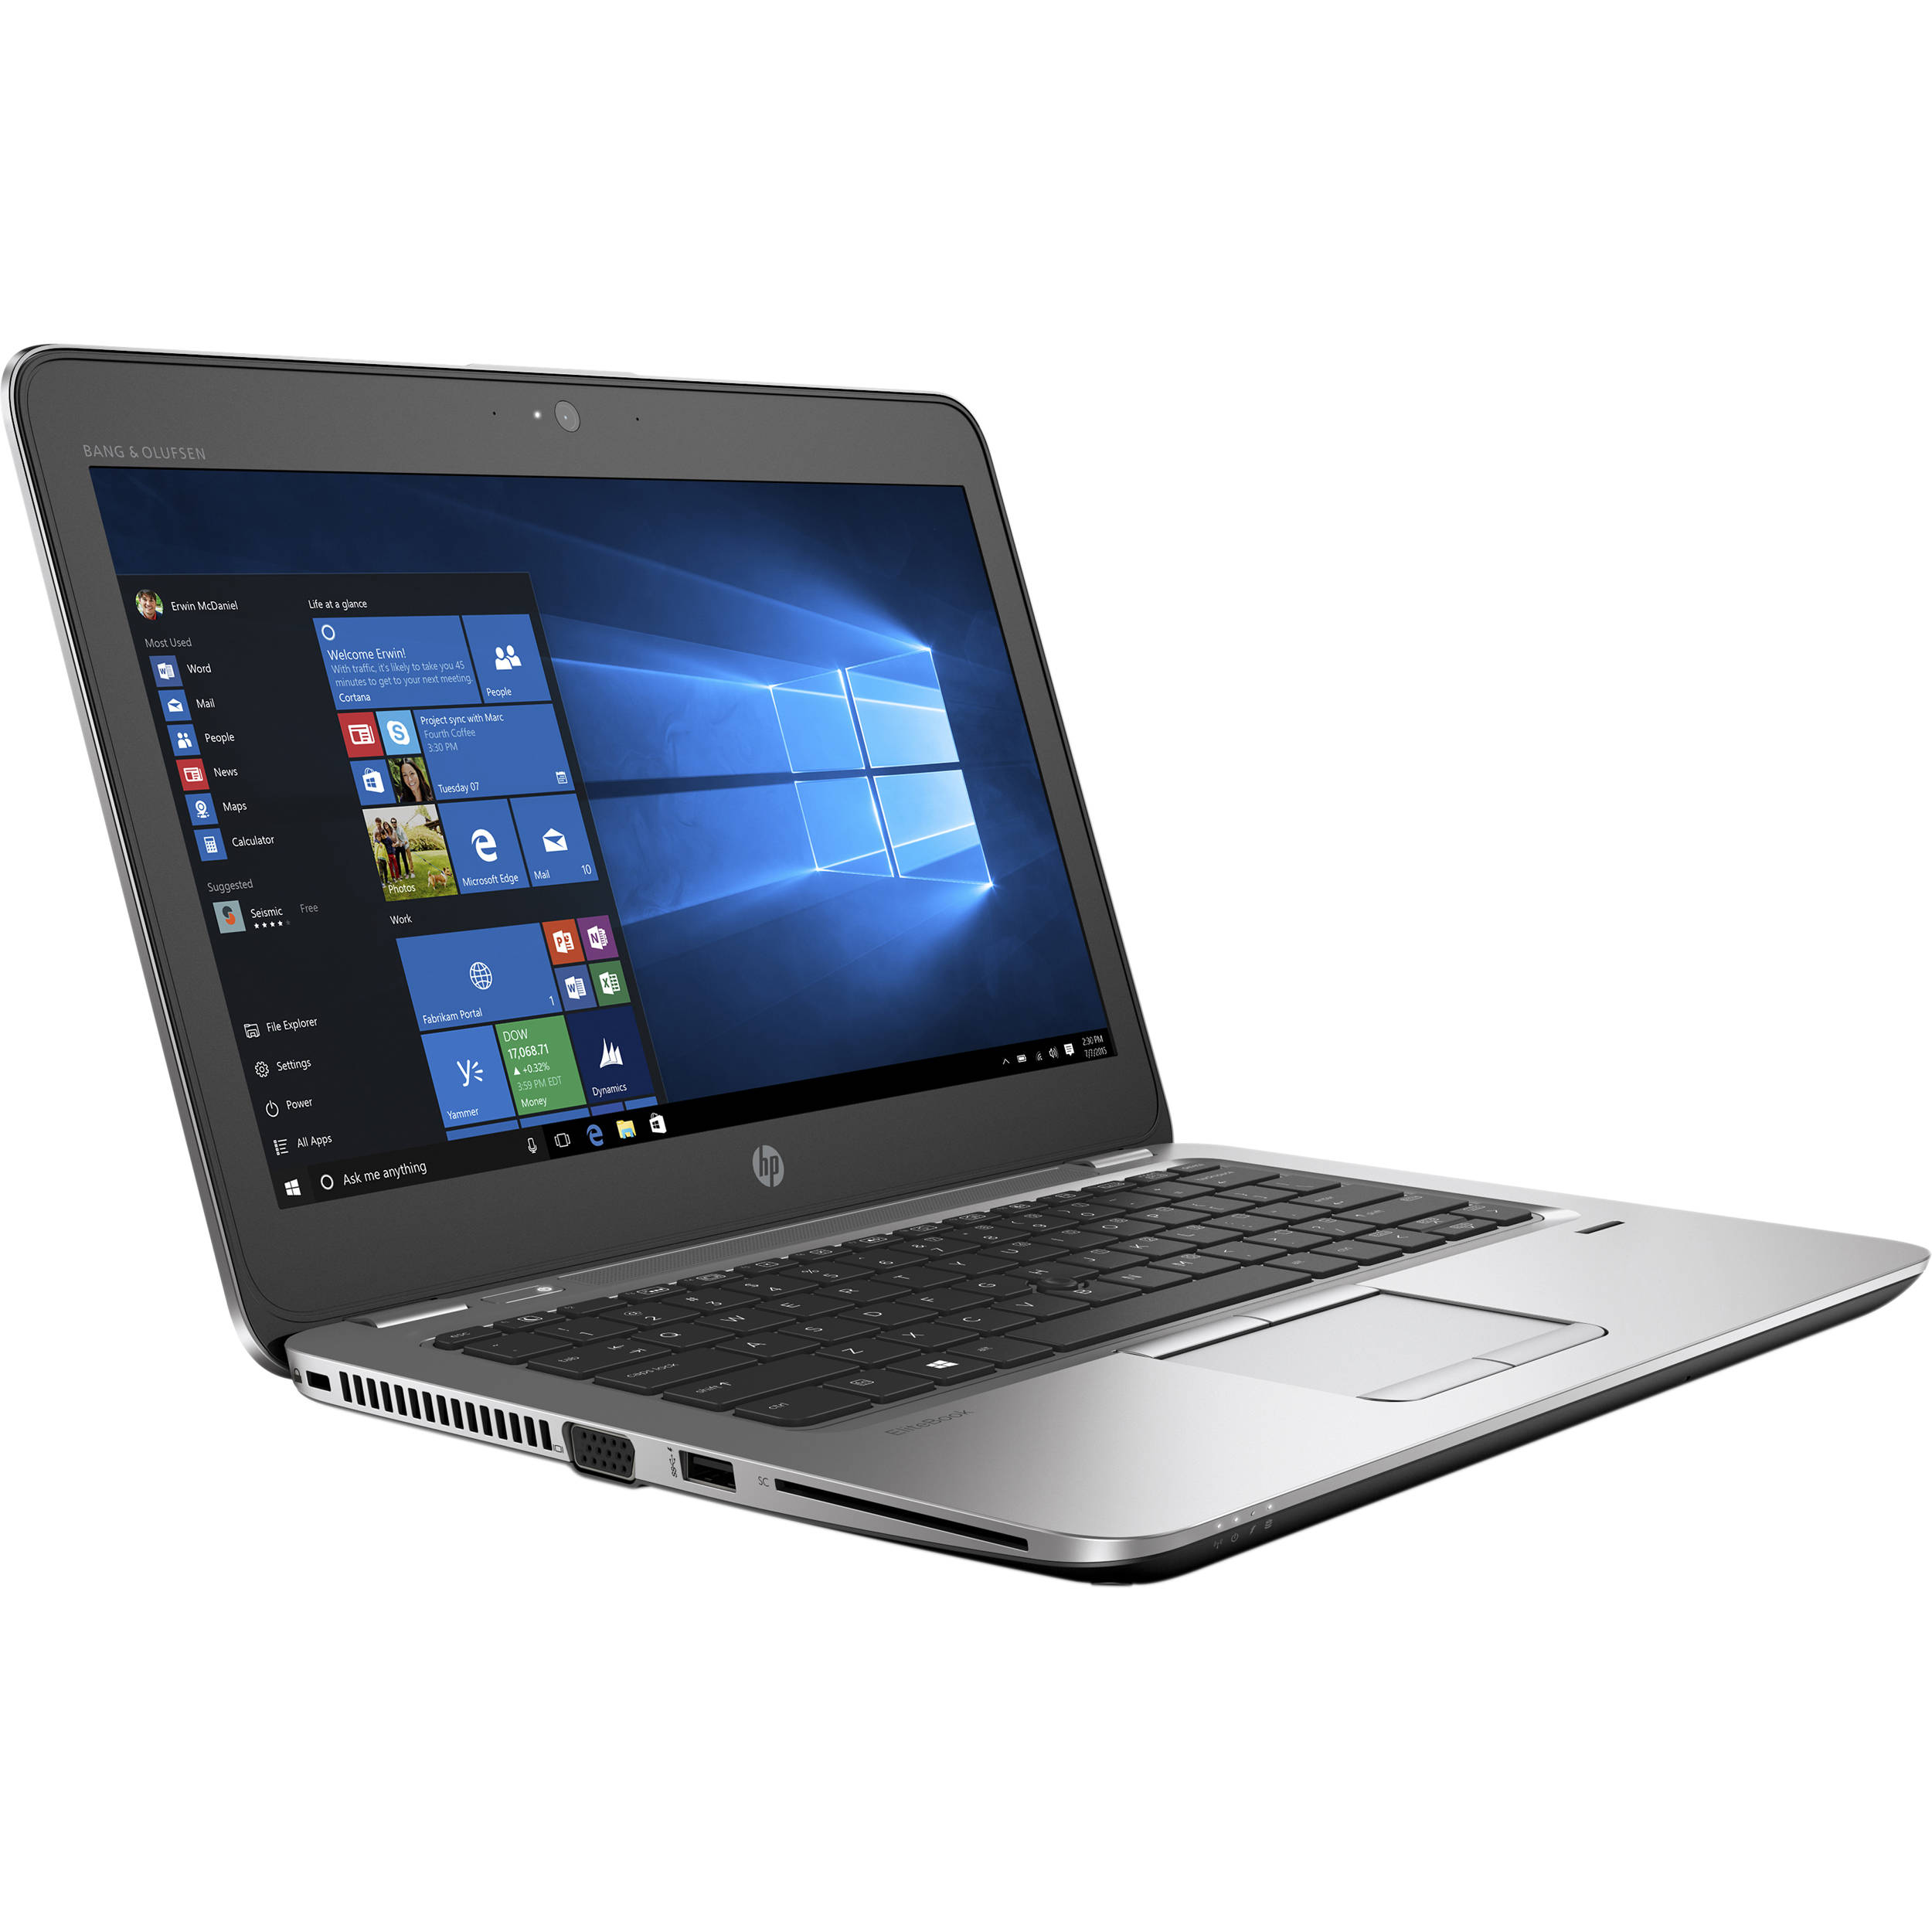 Portátil Ultrabook HP EliteBook 820 G3 TACTIL GRADO B con teclado castellano (Intel Core i5 6200U 2.3Ghz/8GB/256SSD/12.5FHD/NO-DVD/W7P) Preinstal